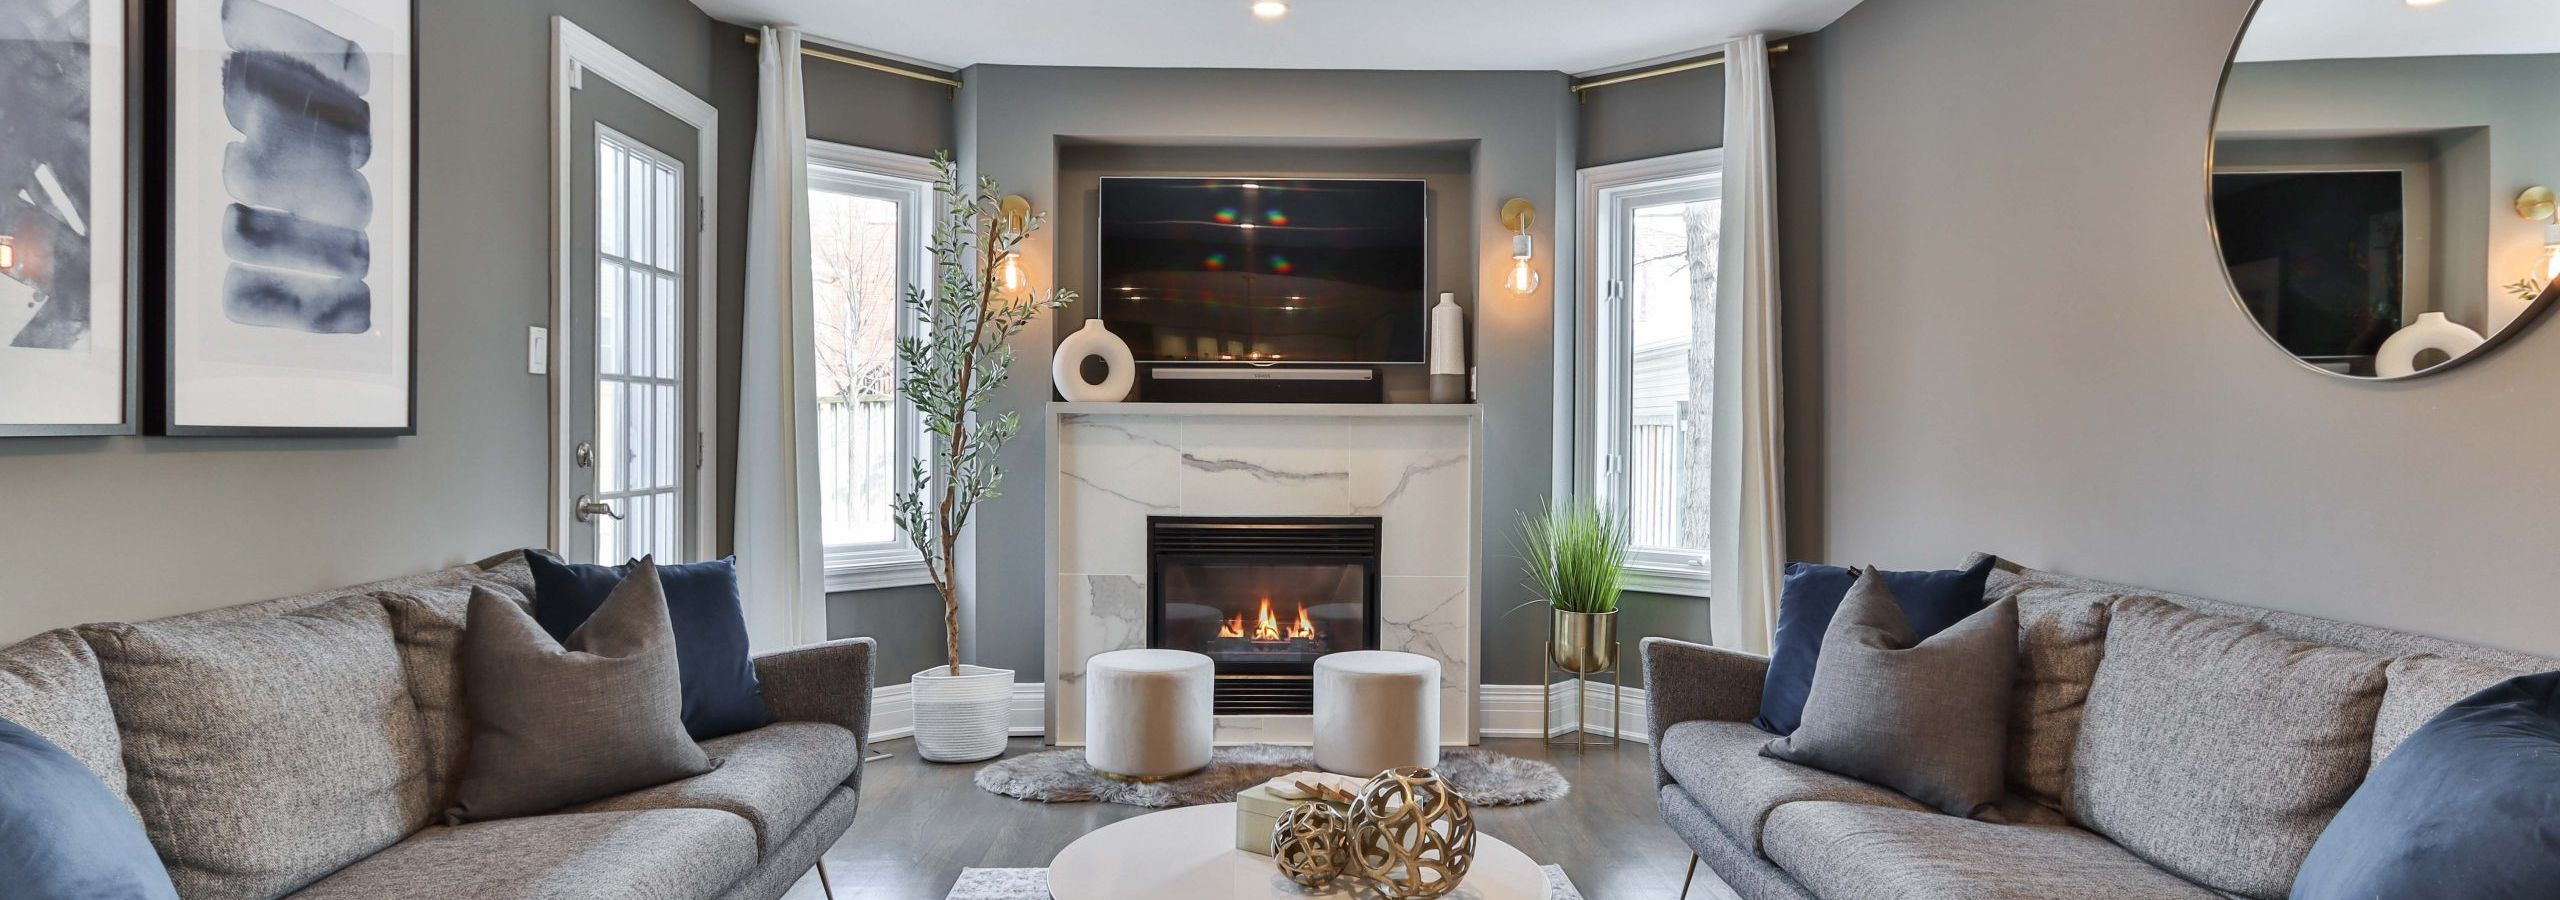 Nanaimo Heating grey decor living room with fireplace